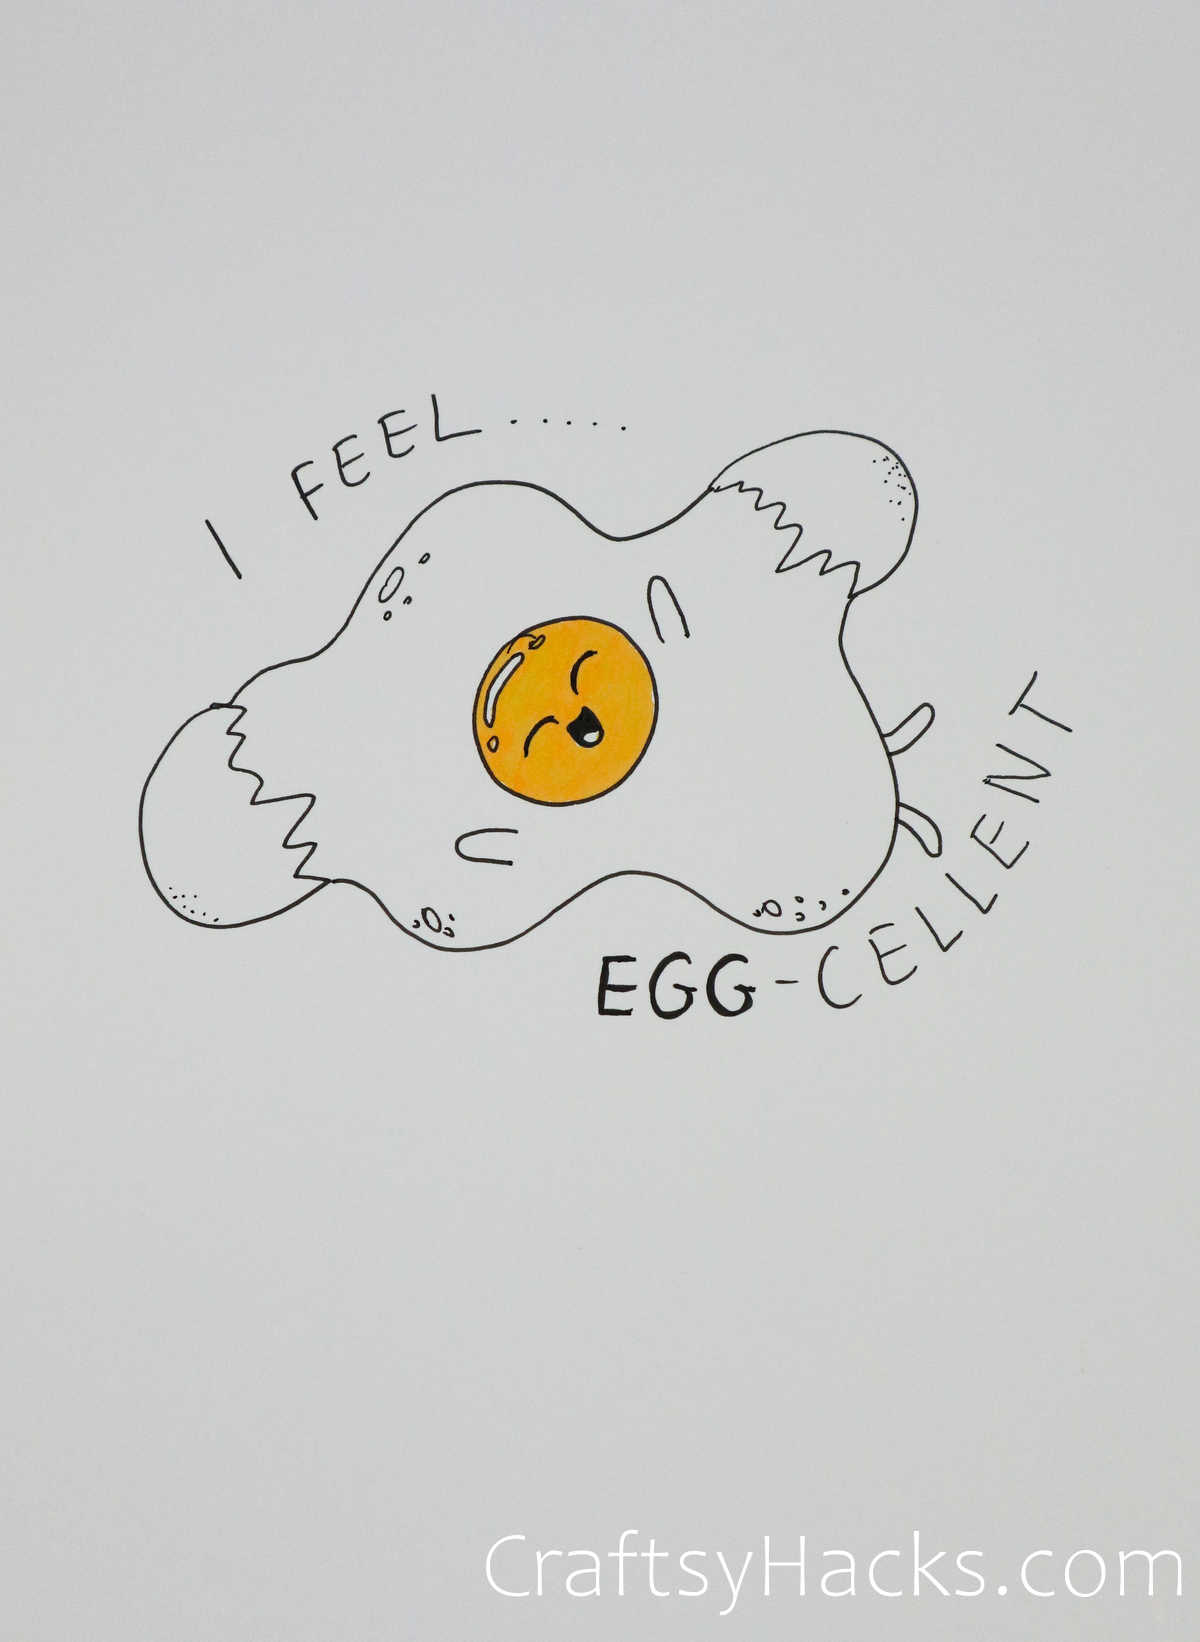 egg-cellent day